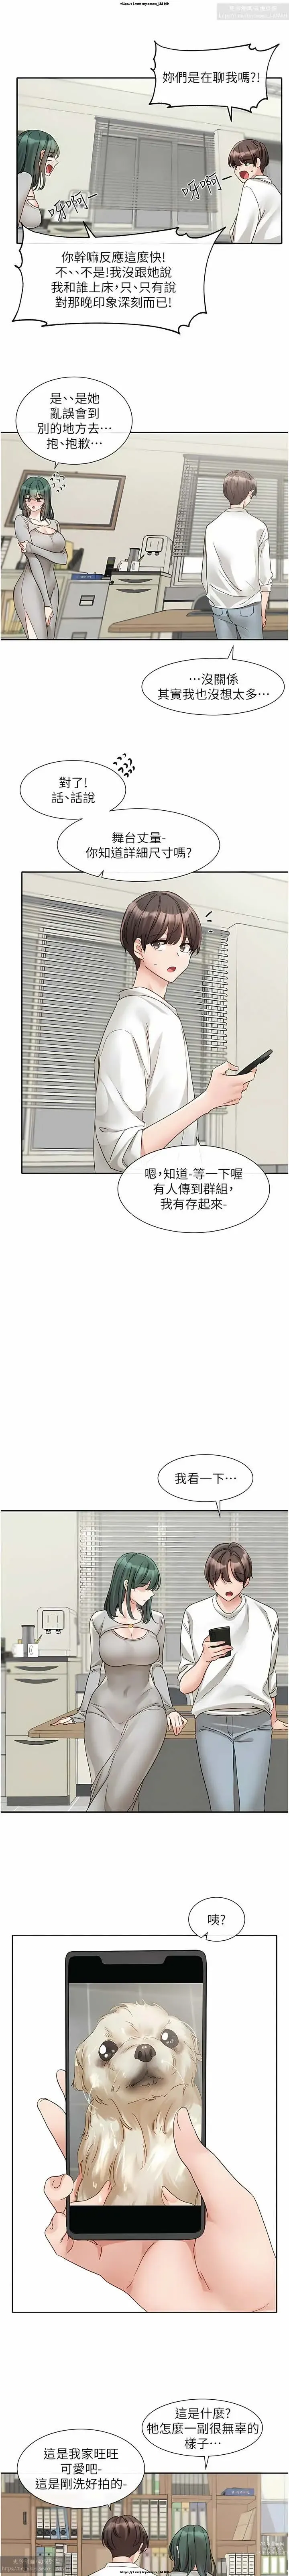 Page 56 of manga 社團學姊 138-141 官方中文 社团学姐